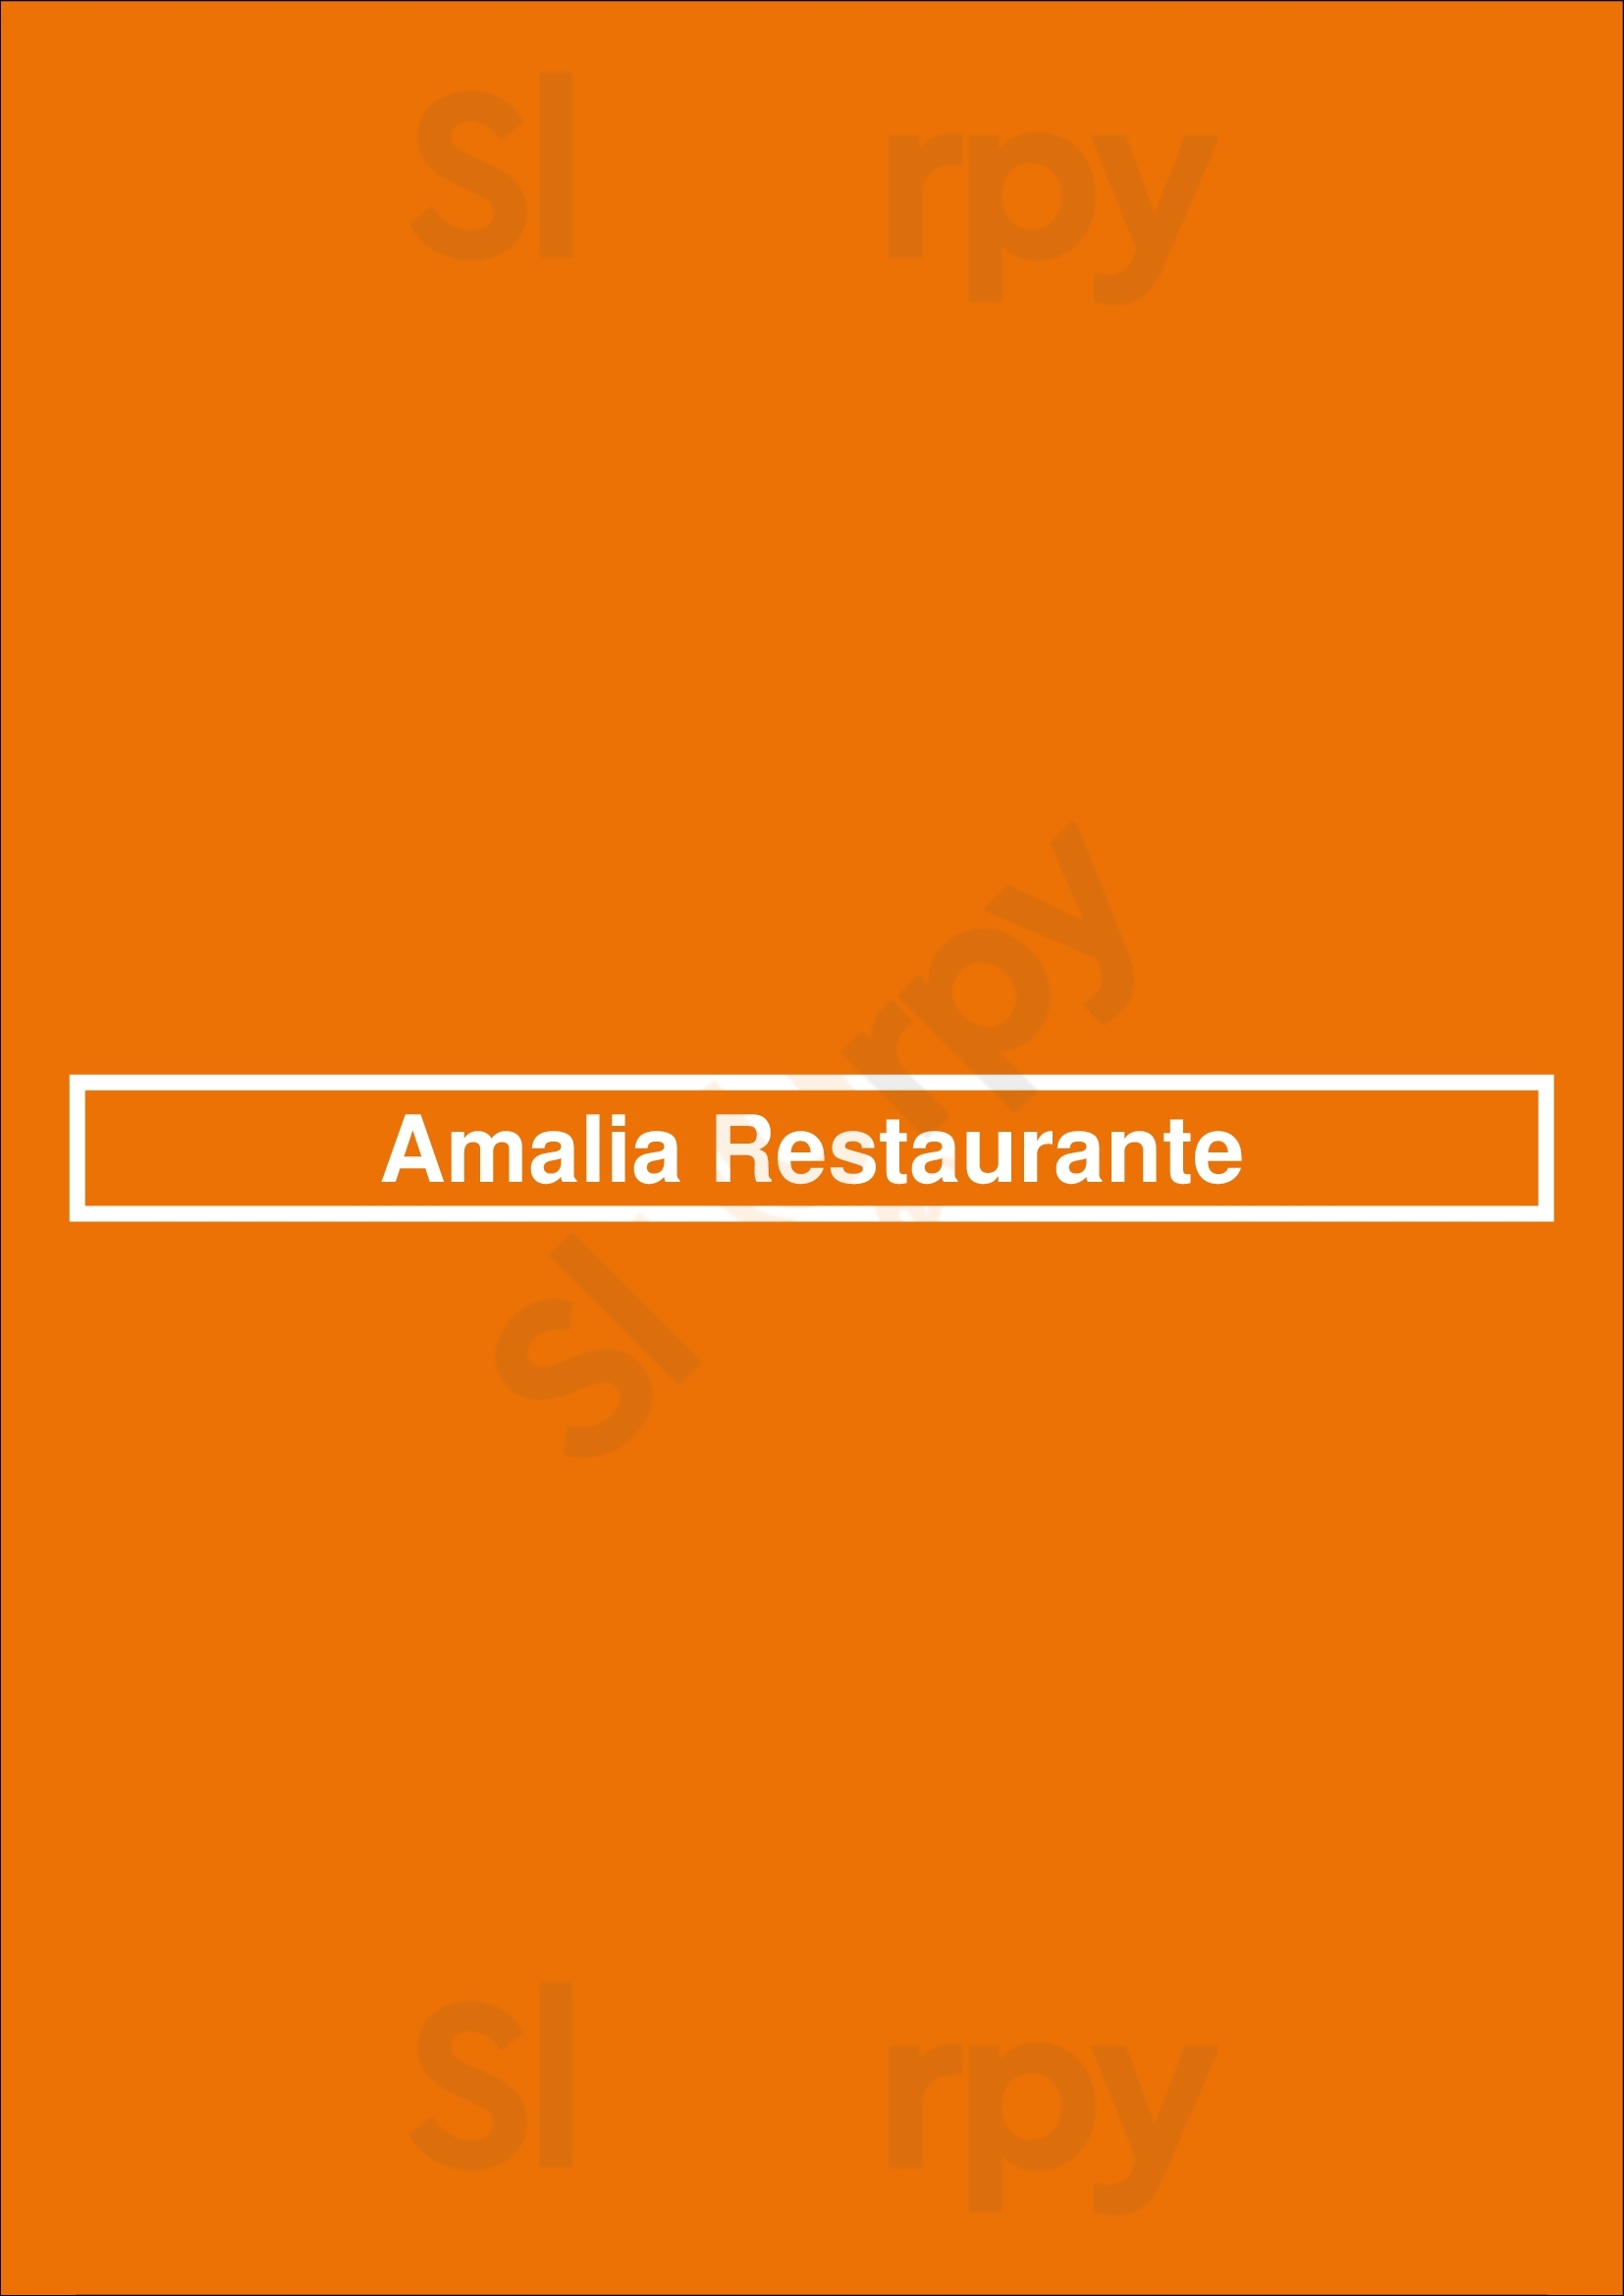 Amalia Restaurante Buenos Aires Menu - 1